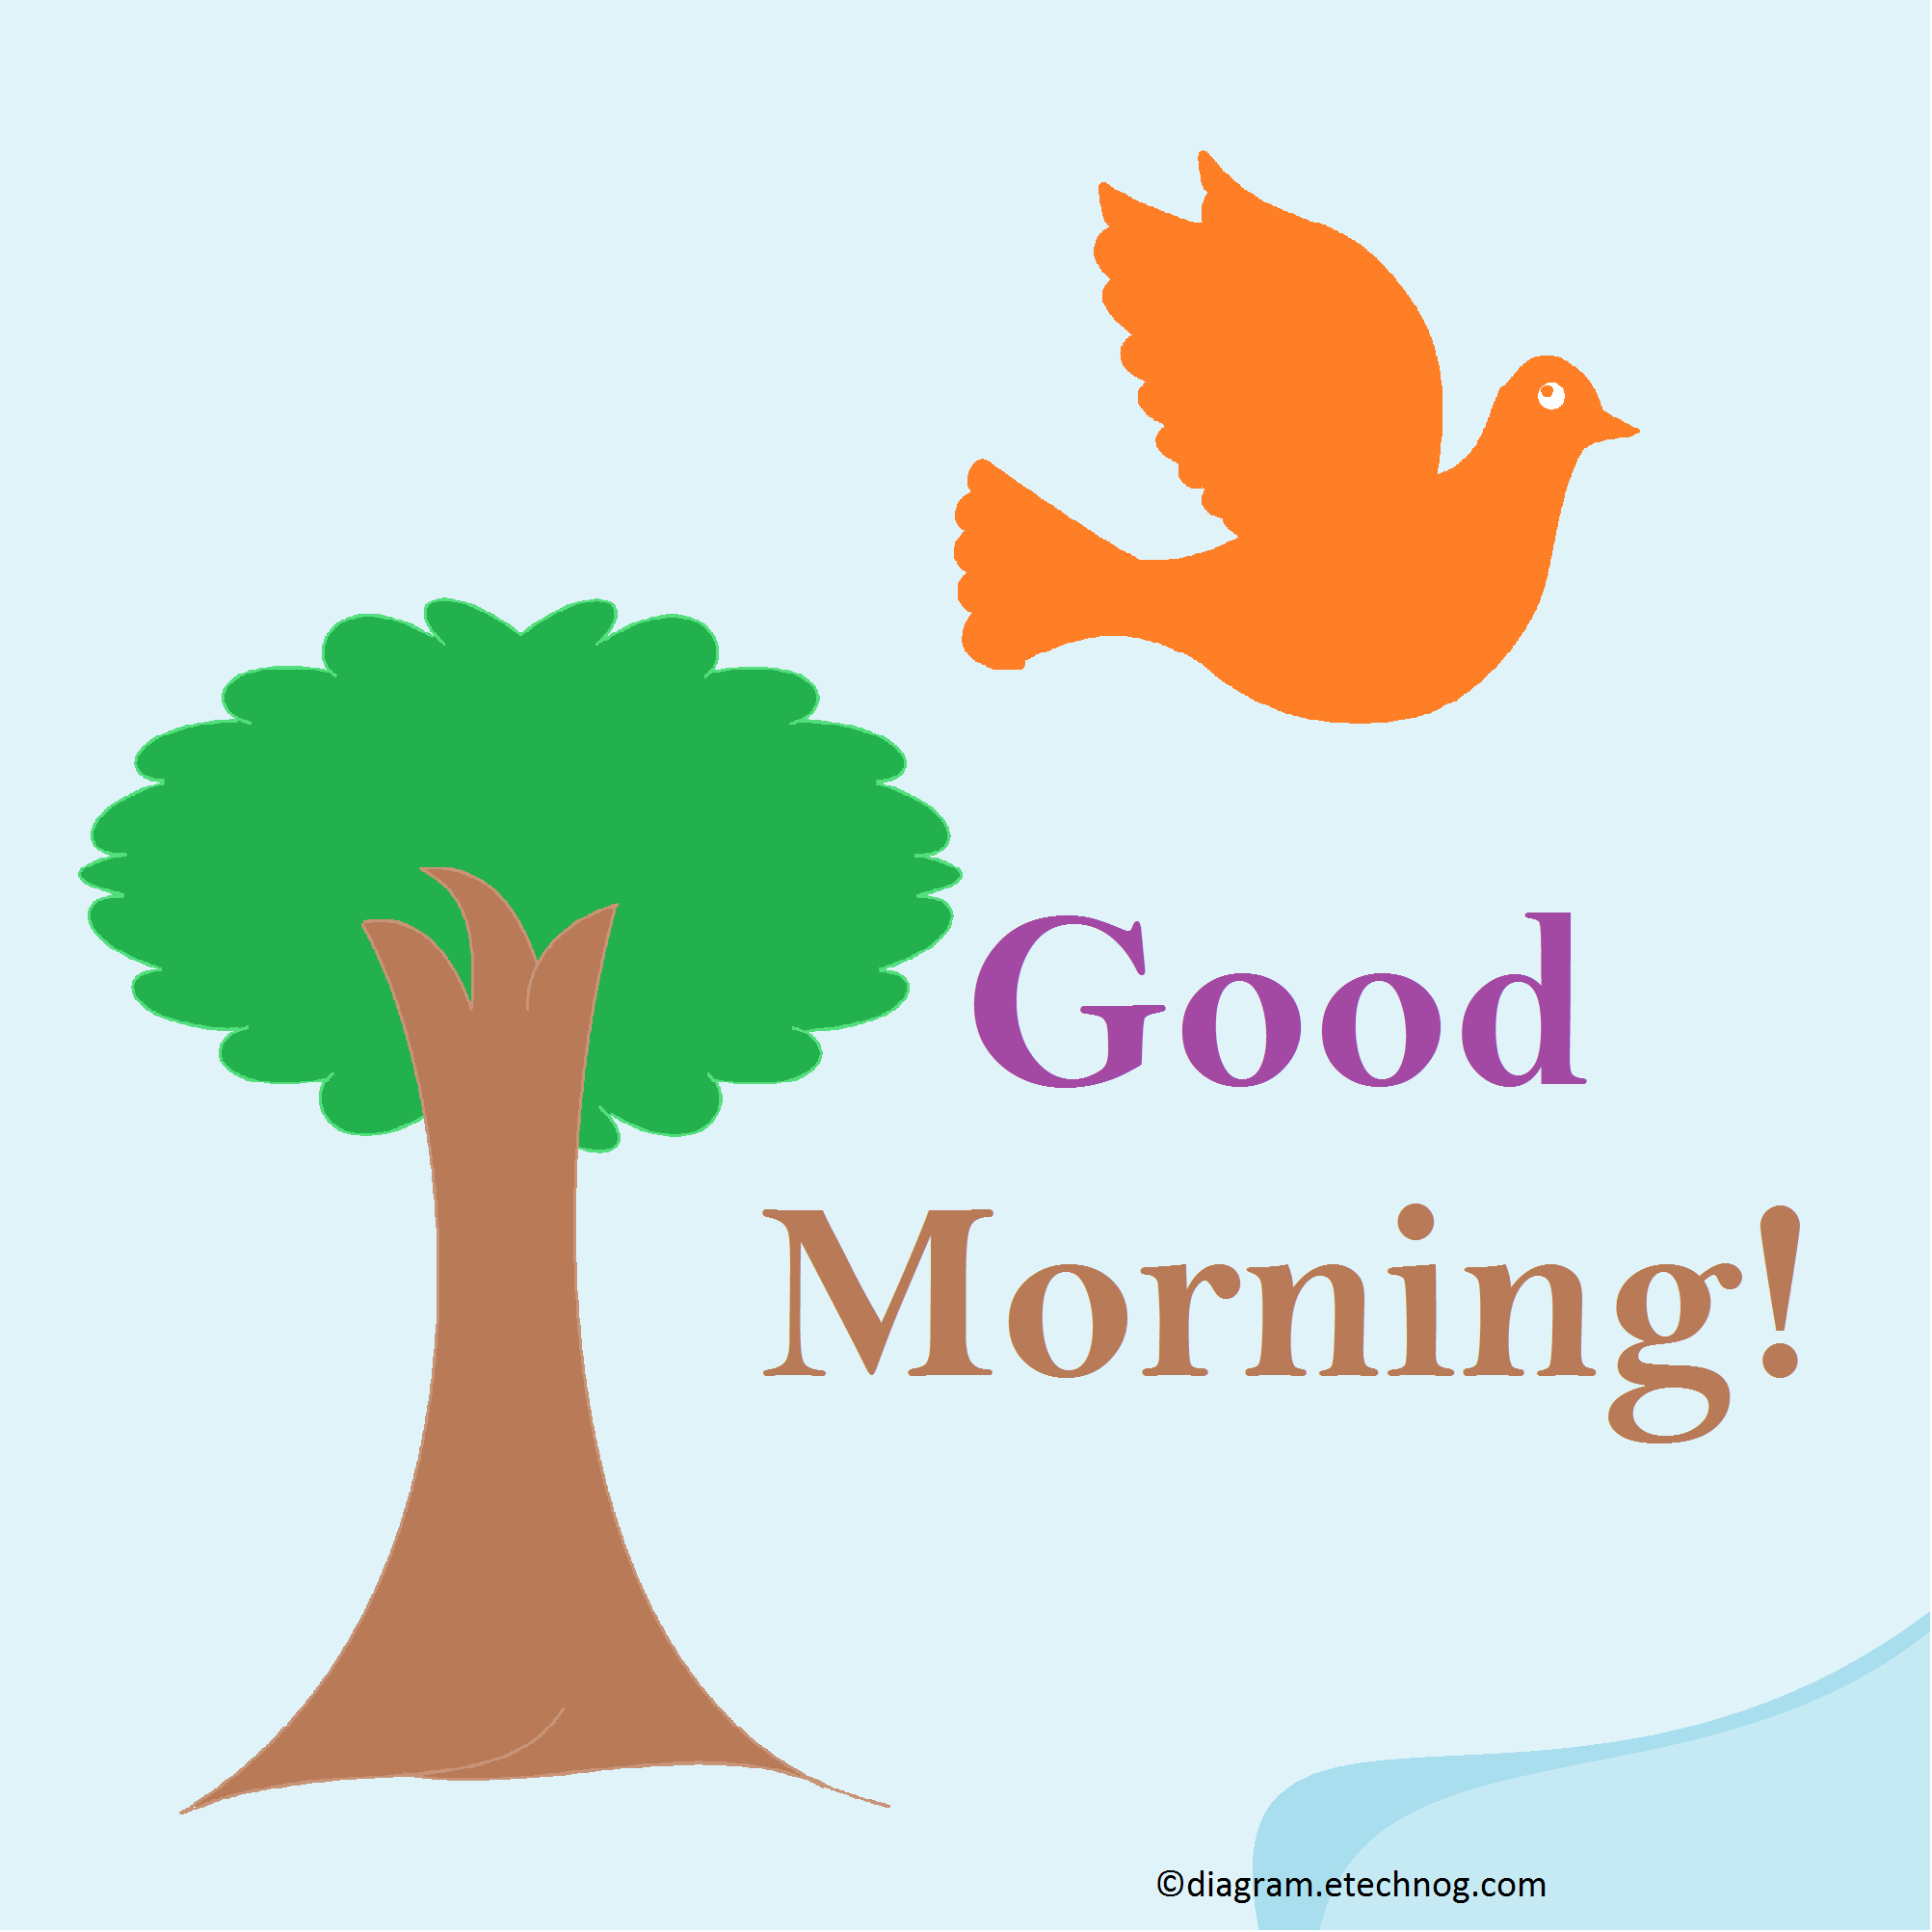 Good Morning Image(Bird Flying around Tree)